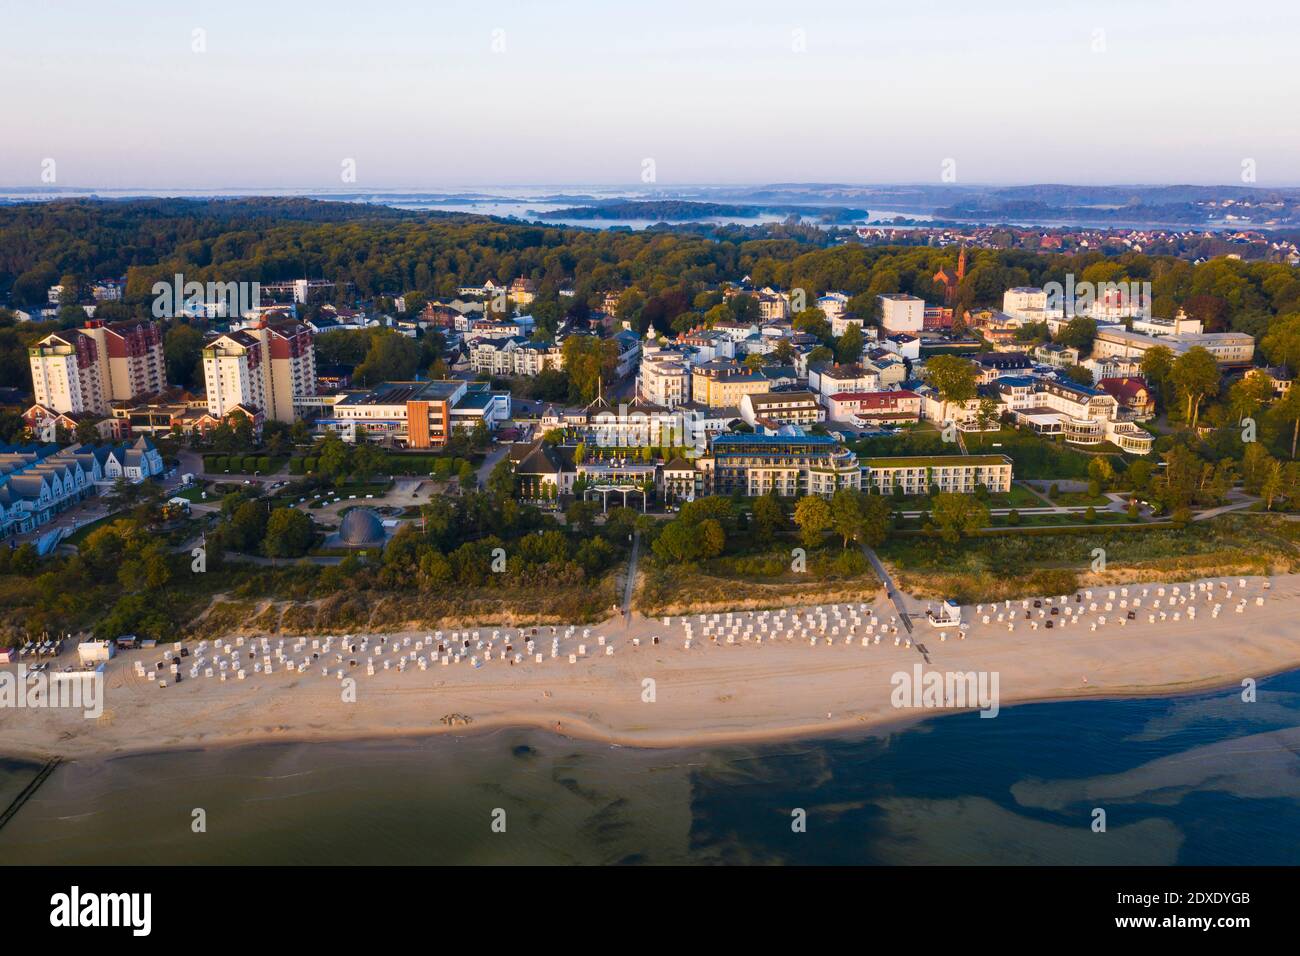 Germany, Usedom, Seaside resort and beach, aerial view Stock Photo - Alamy